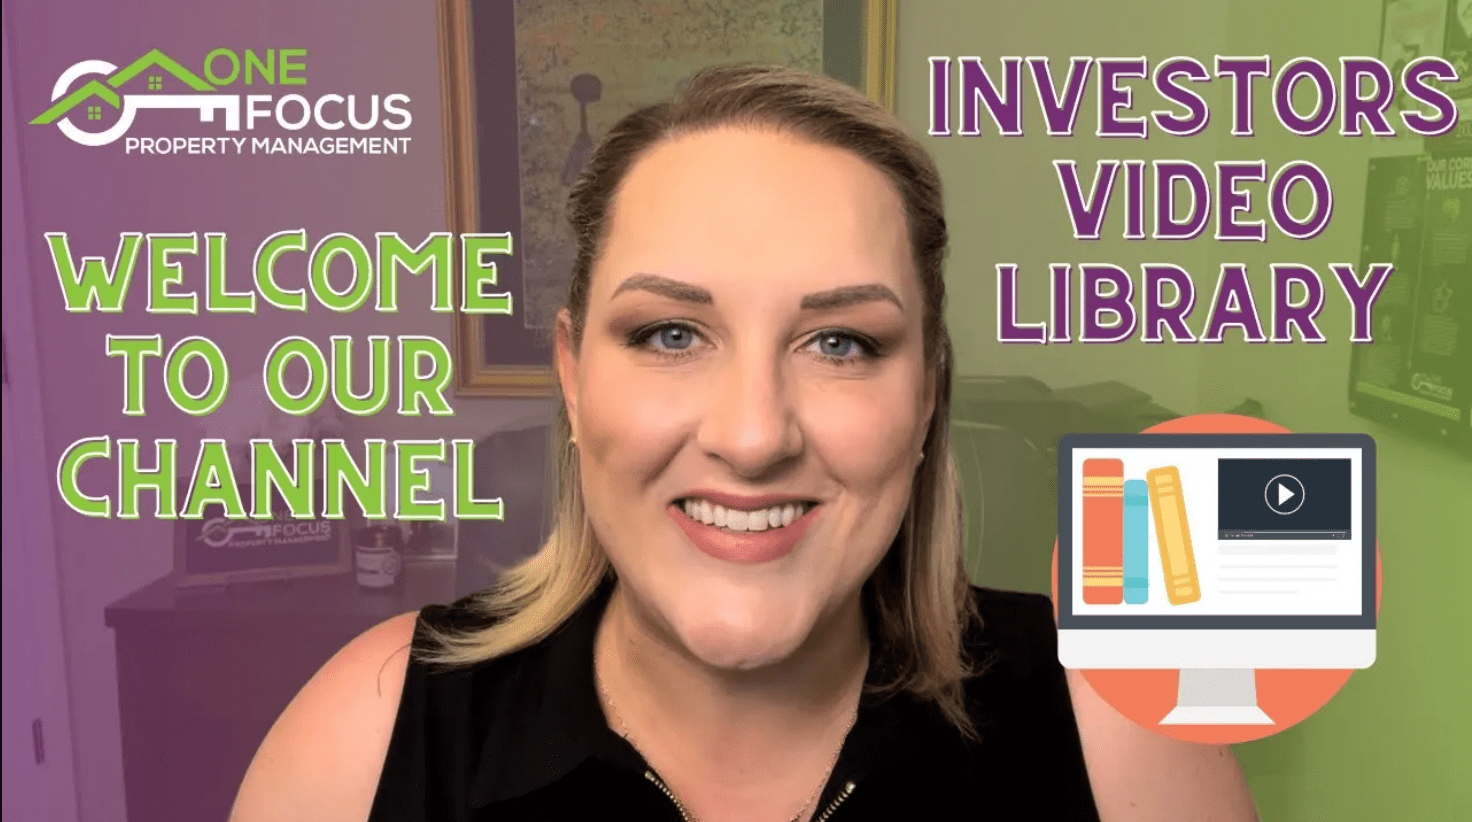 Investors video library